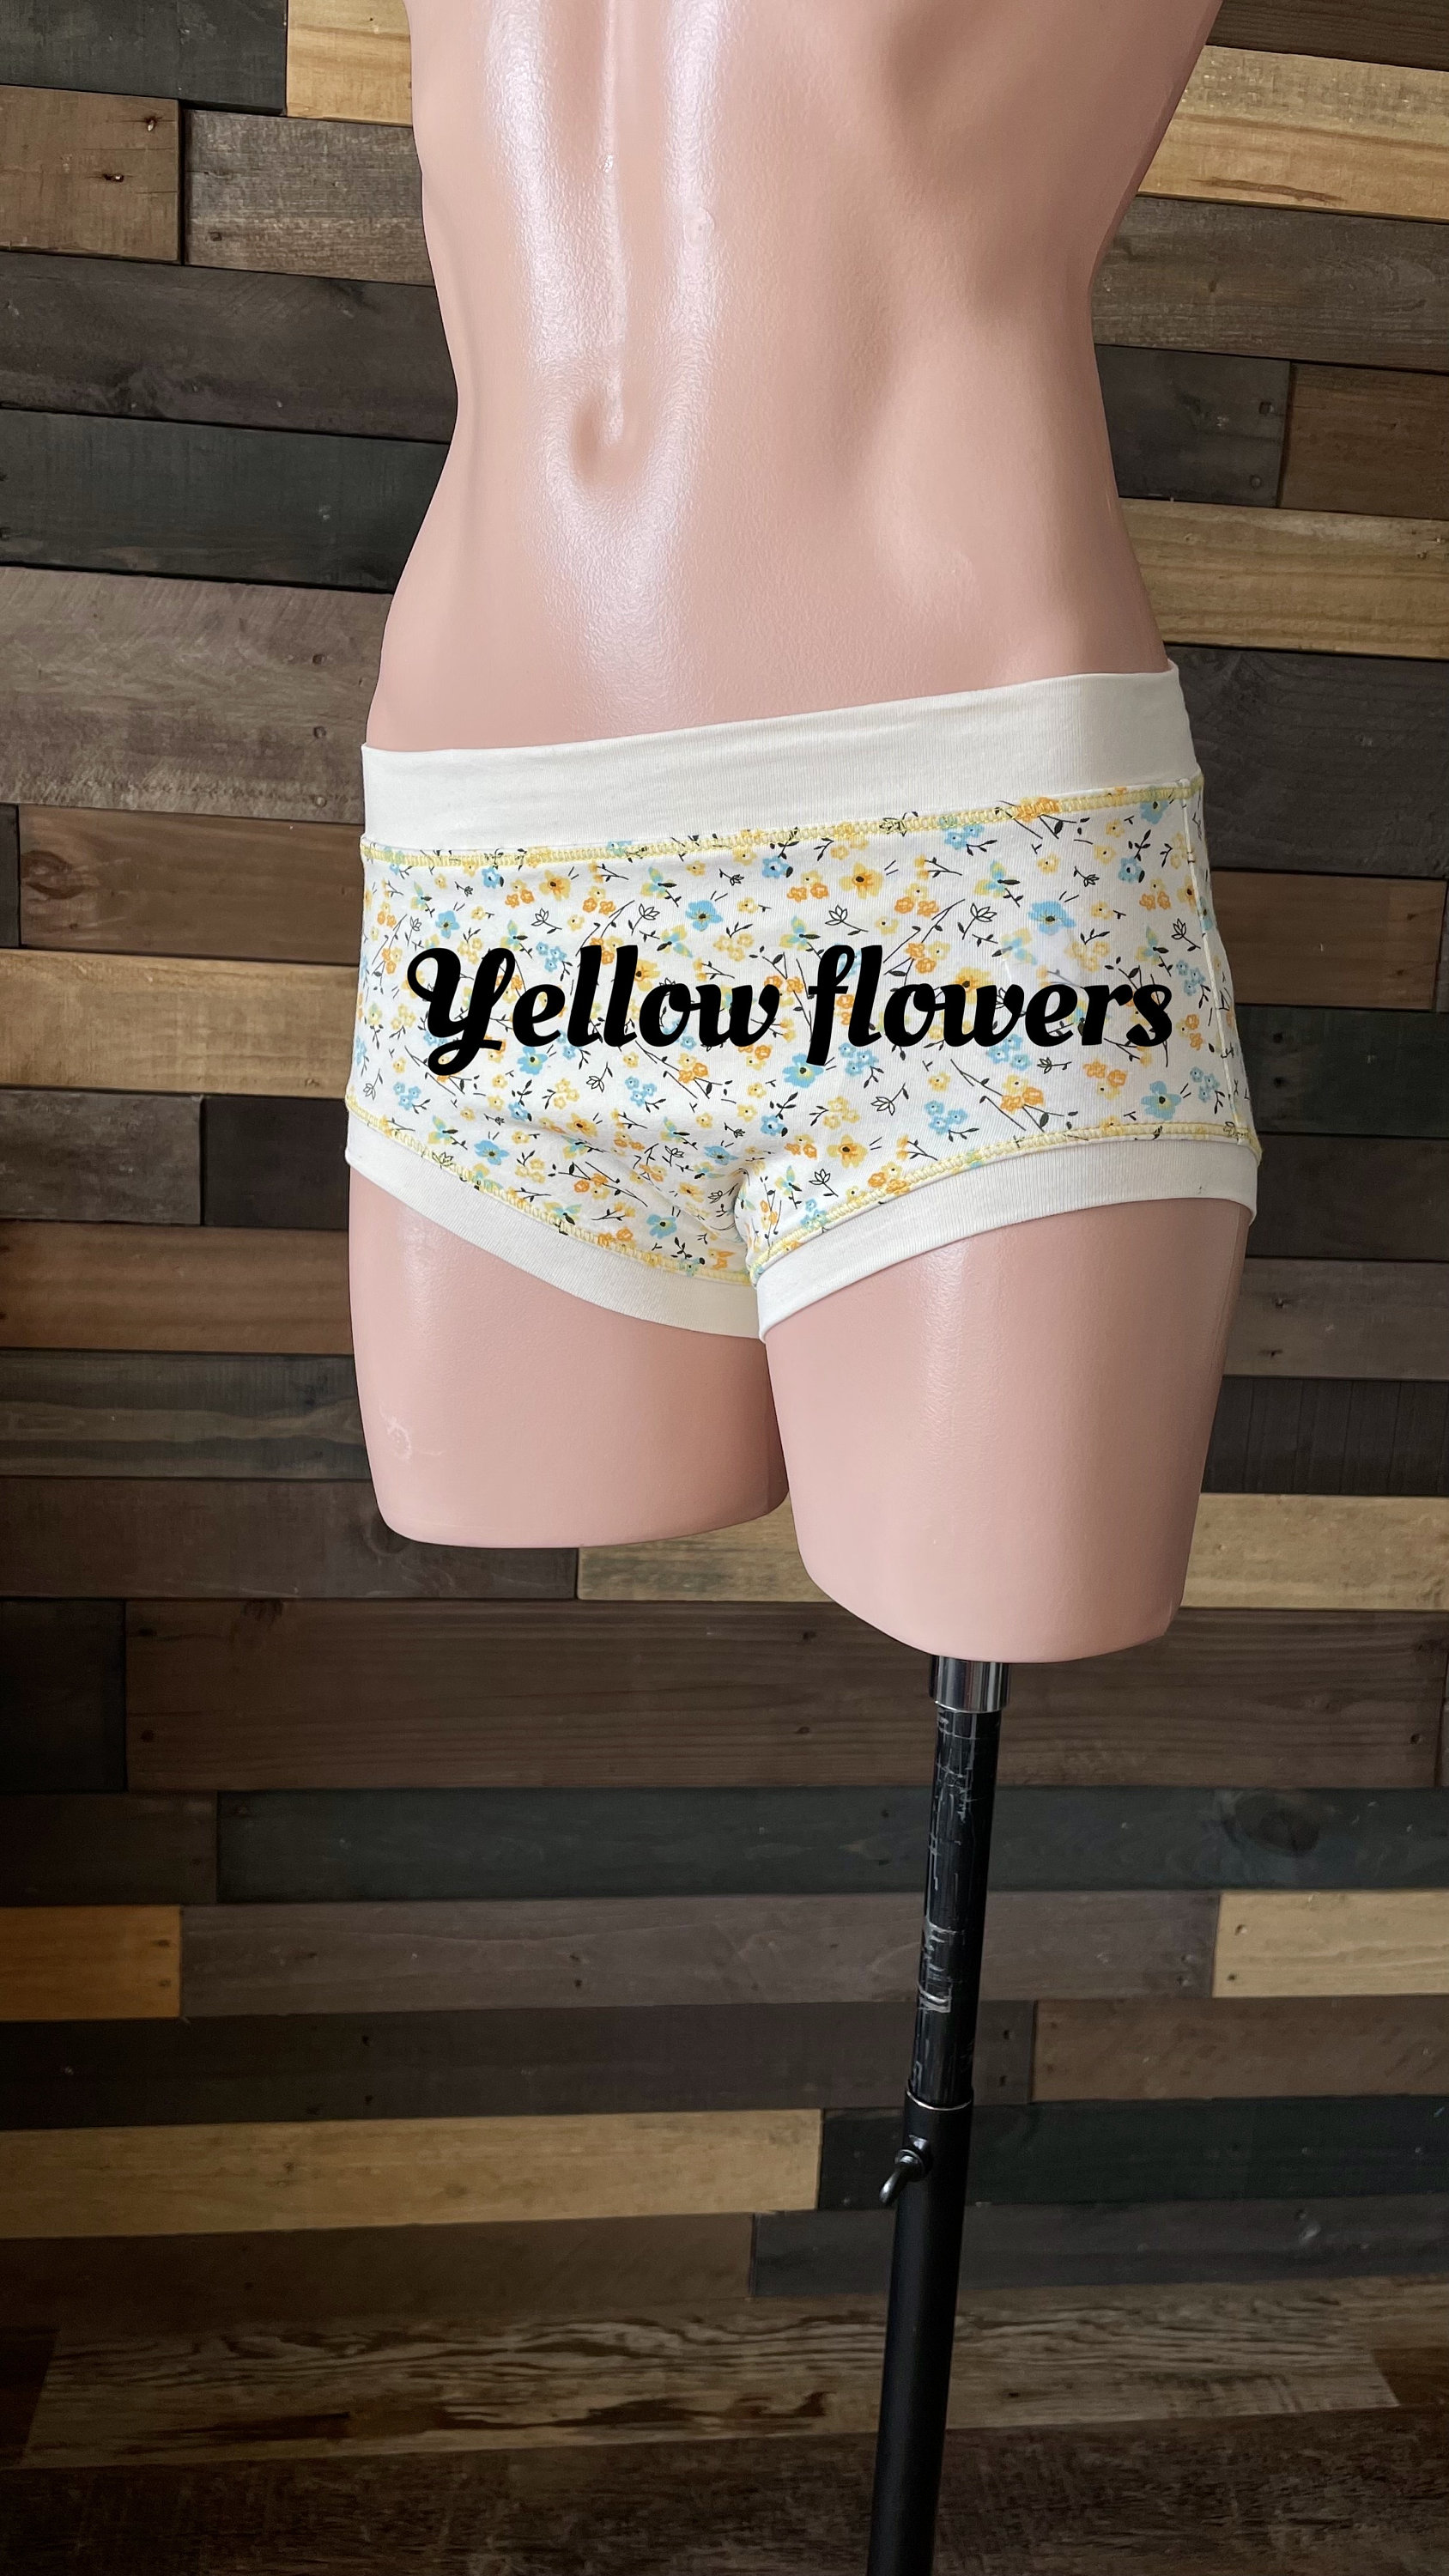  Underwear for transgender kids cotton panty for